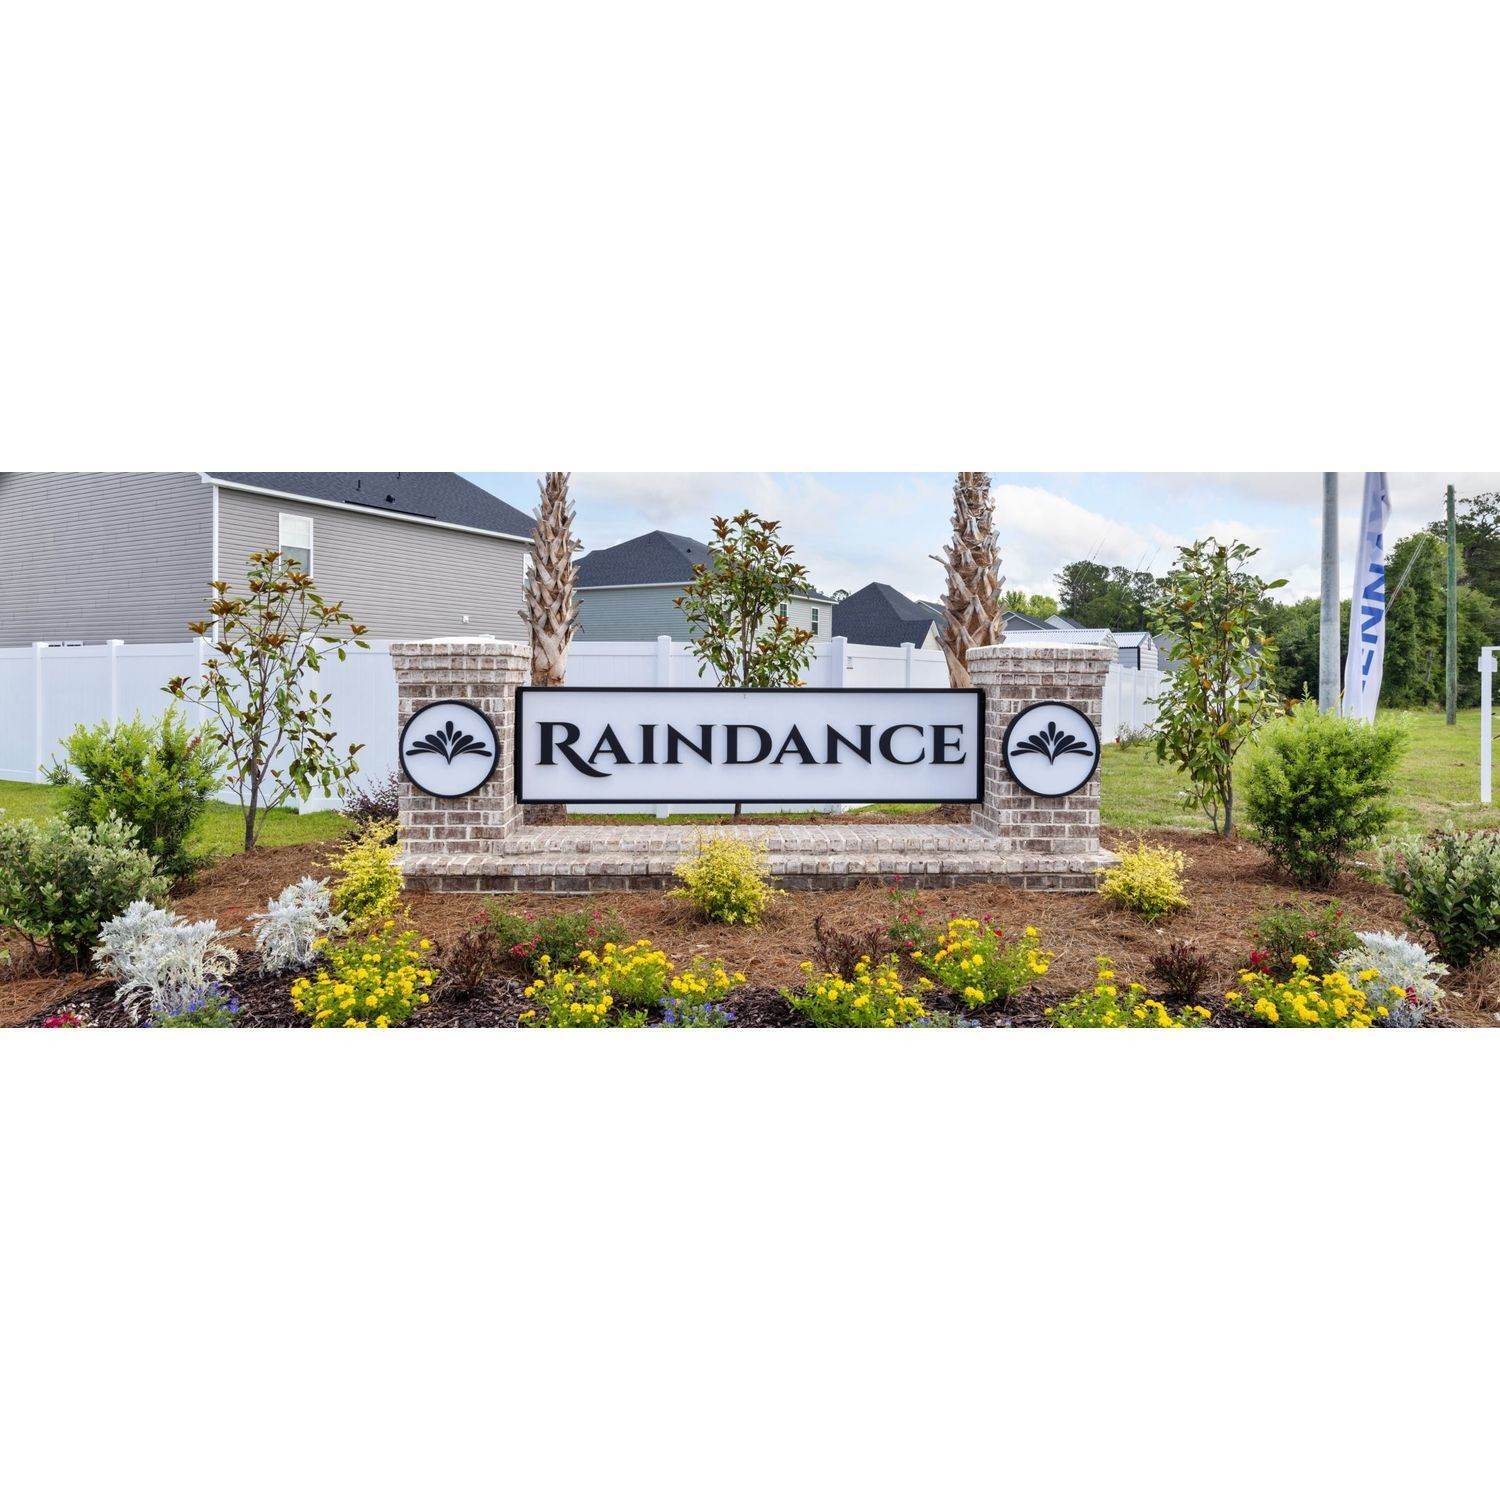 Raindance building at 103 Franklins Walk, Rincon, GA 31326